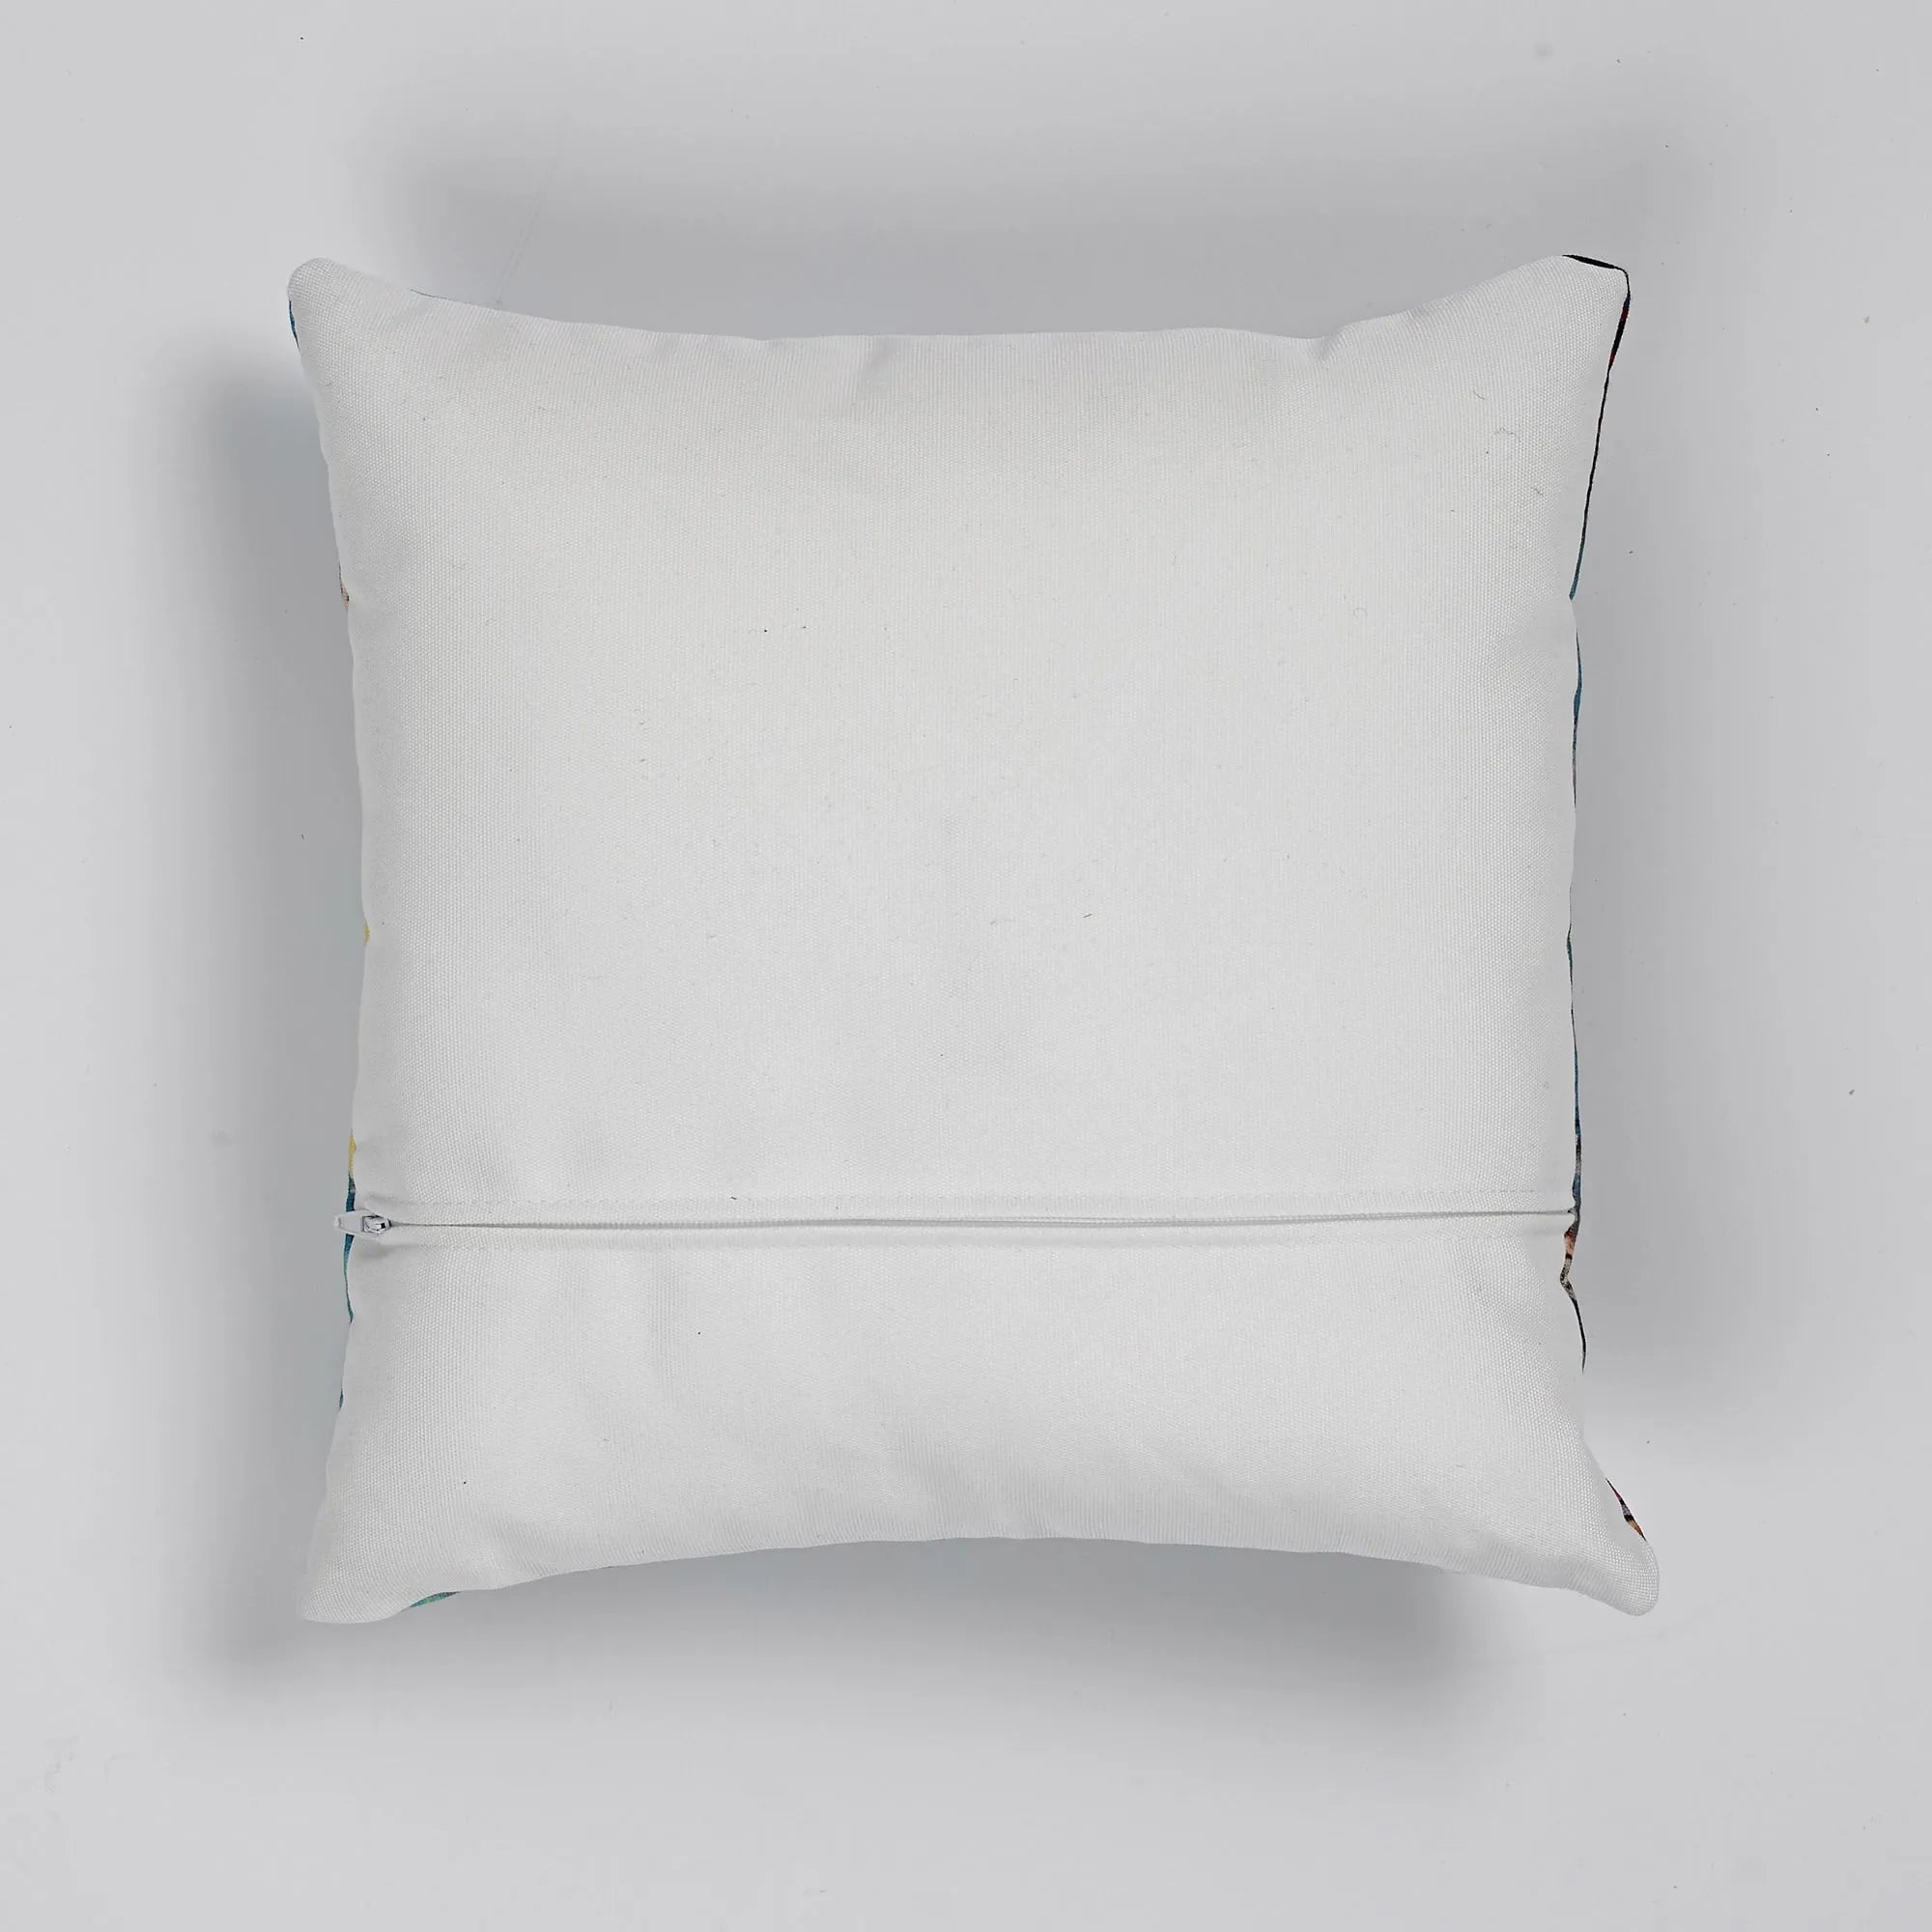 Le Cirque Corvi - Georges De Feure Cushion - Decorative Throw Pillow - Throw Pillows - Aesthetic Art